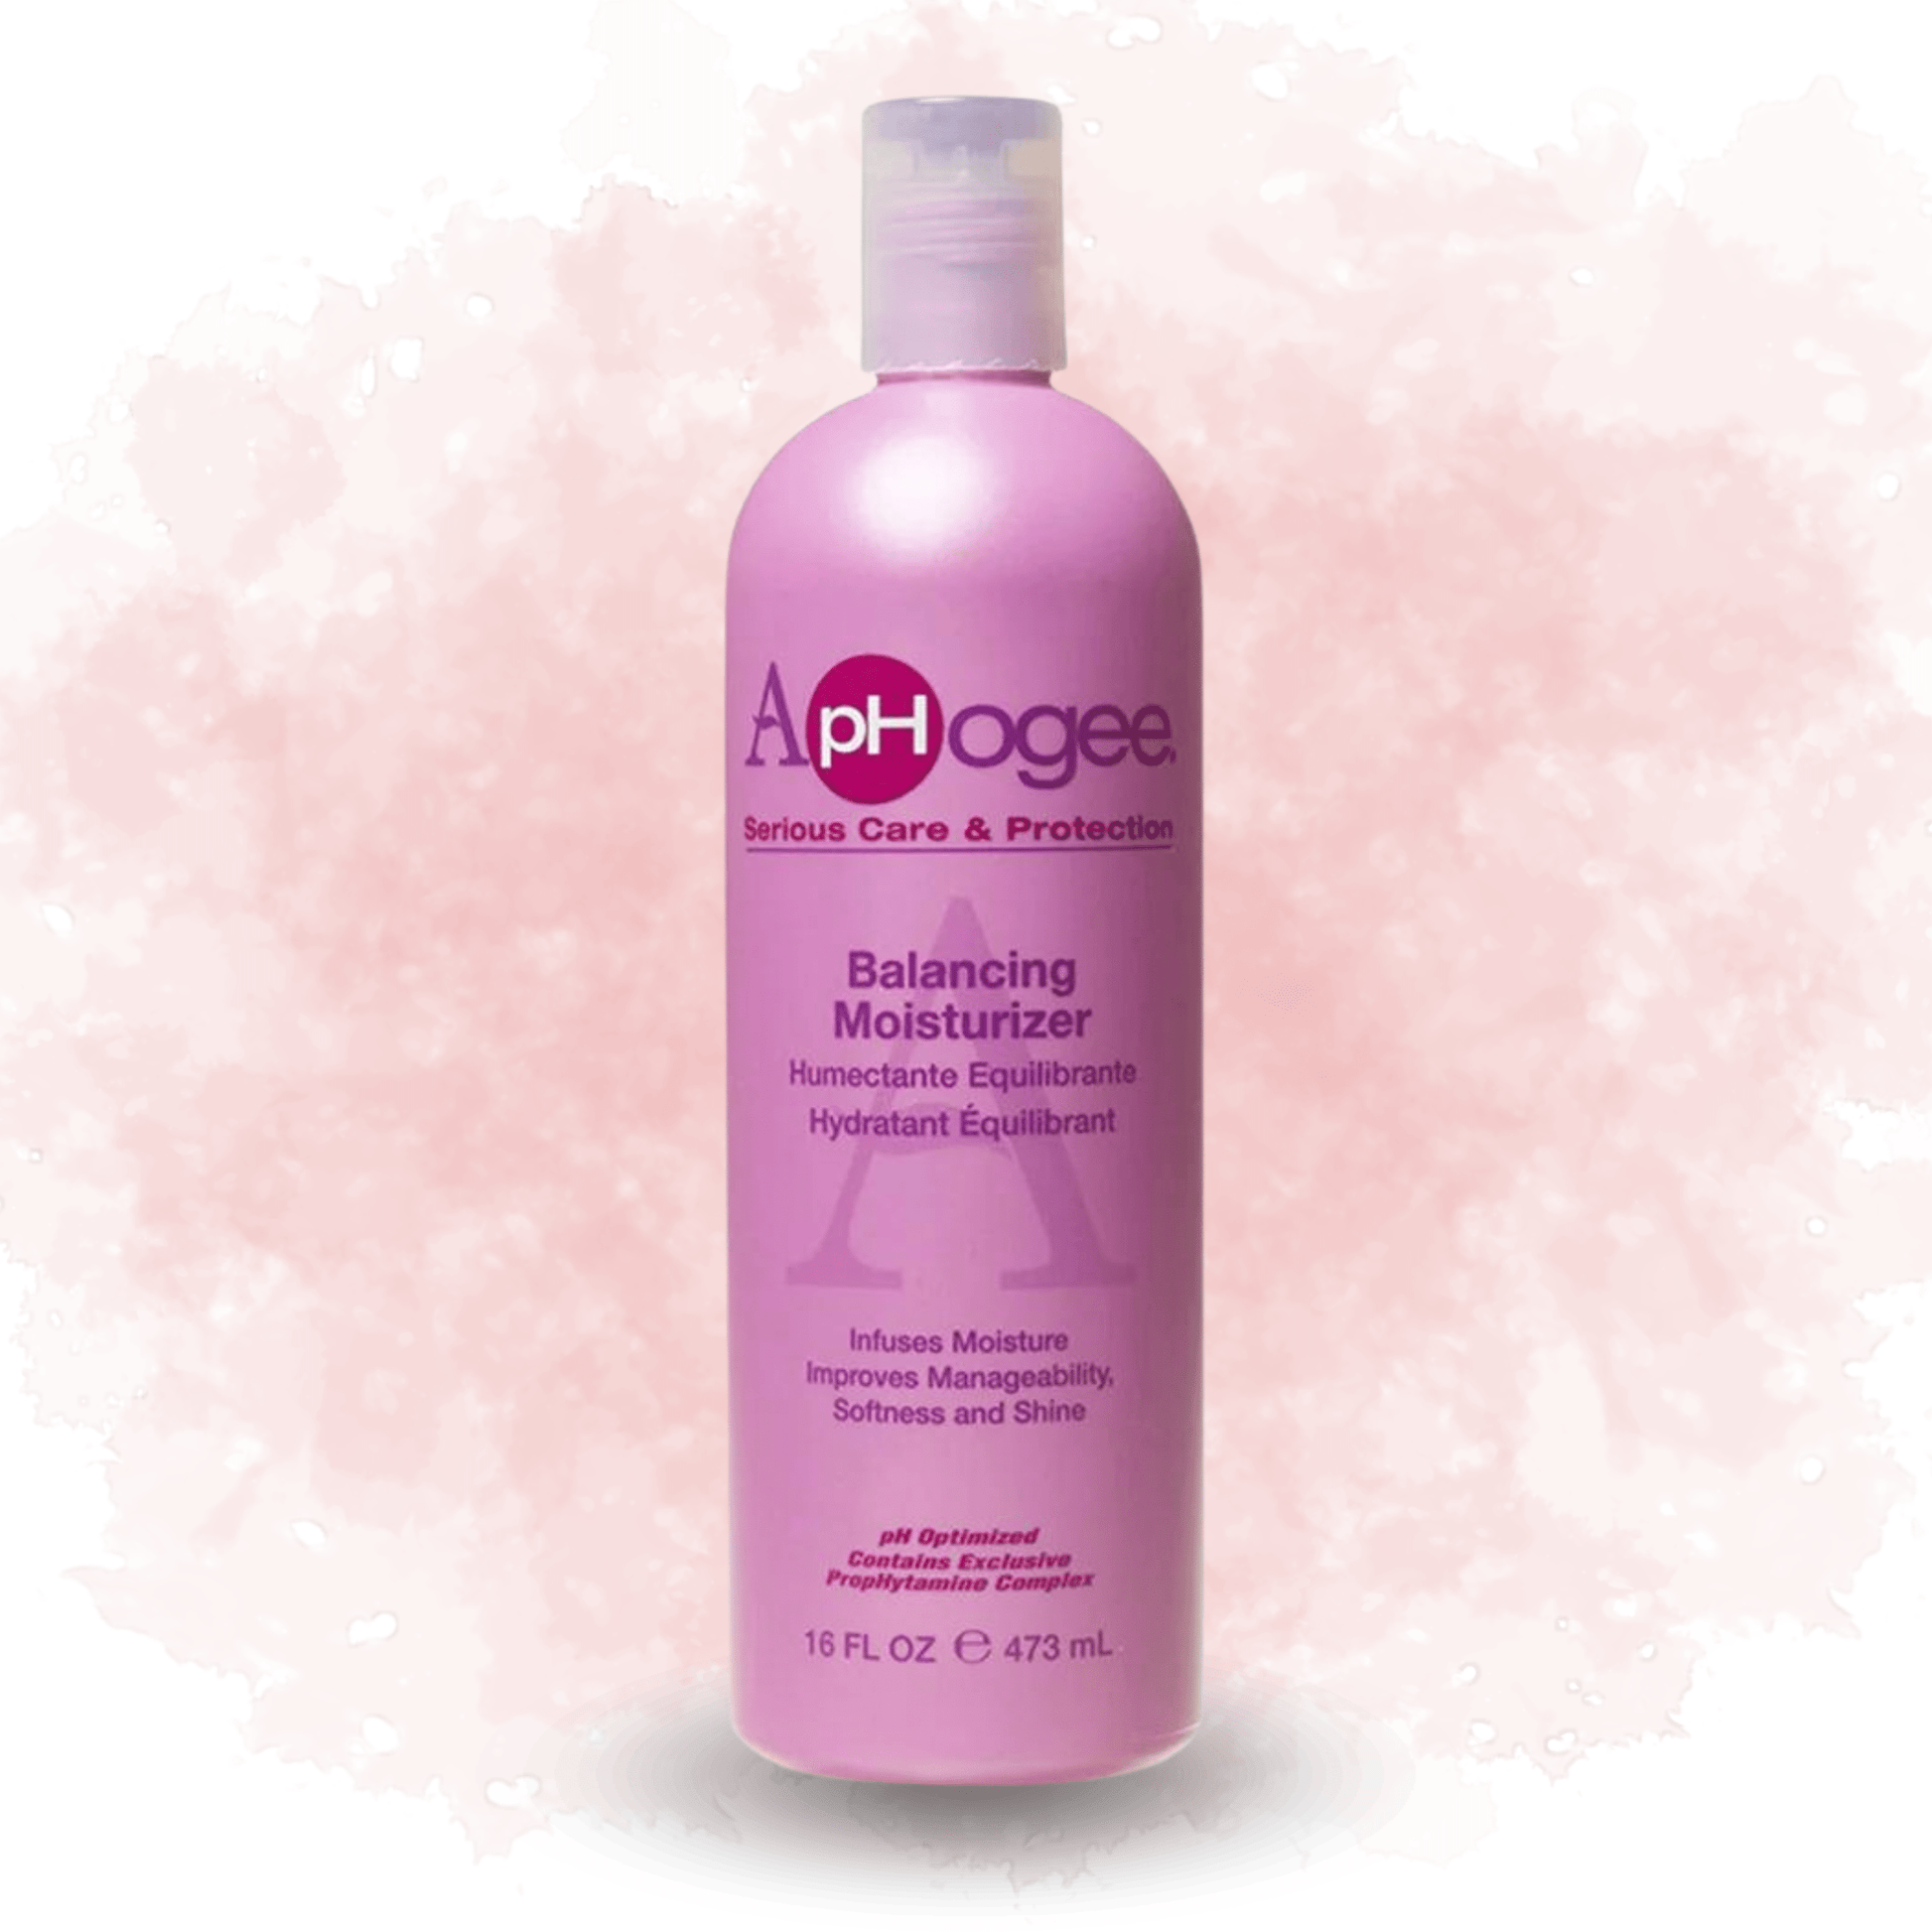 ApHogee - Masque hydratant balancing moisturizer - plusieurs contenance - Aphogee - Ethni Beauty Market